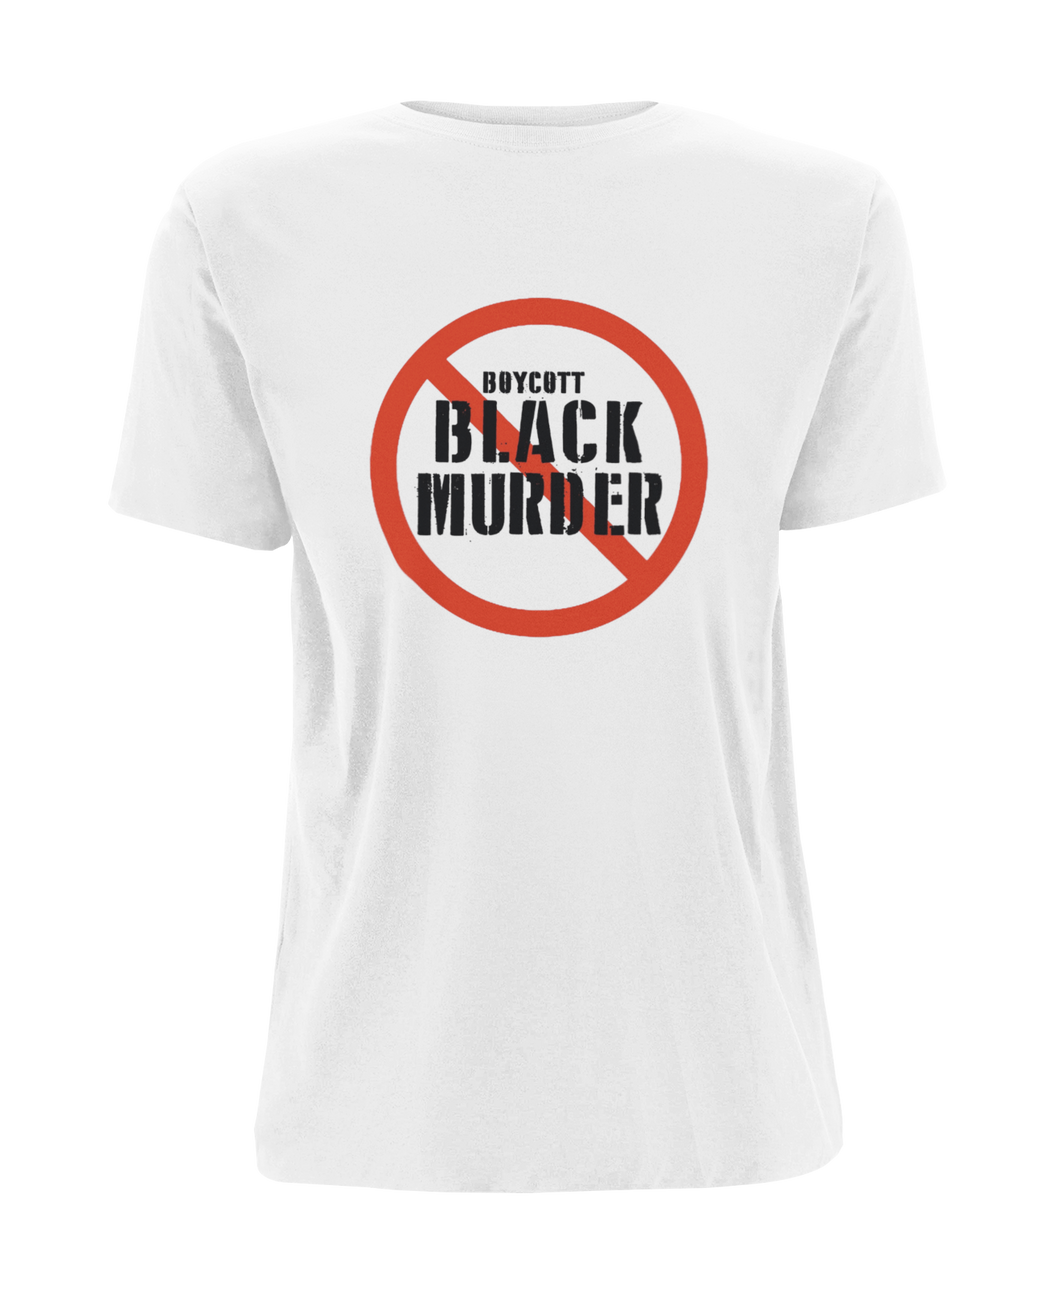 Boycott Black Murder T-Shirt